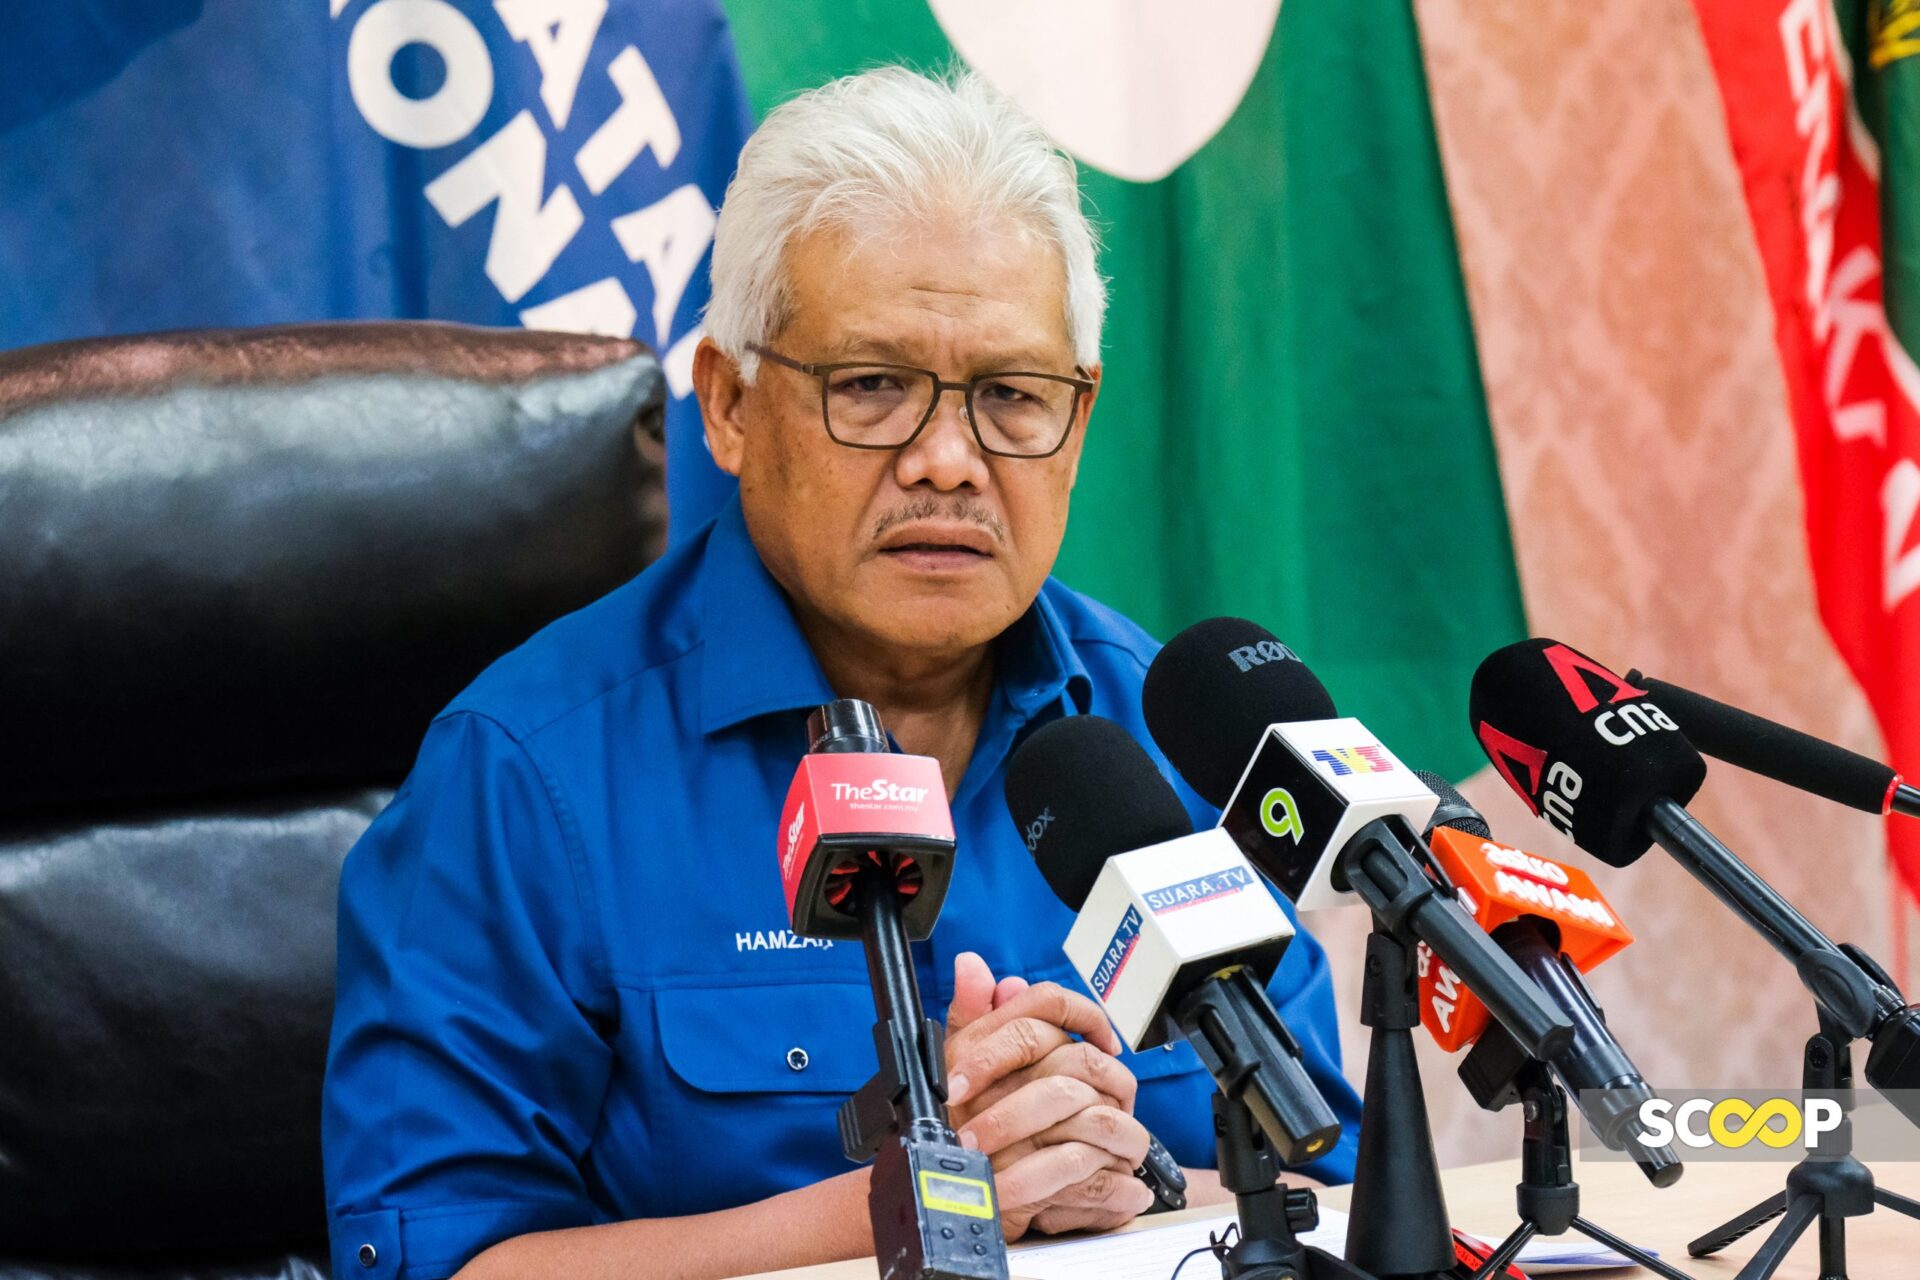 'Don’t interfere, we’ll lodge a report soon enough': Hamzah shrugs off MACC’s call to Wan Saiful